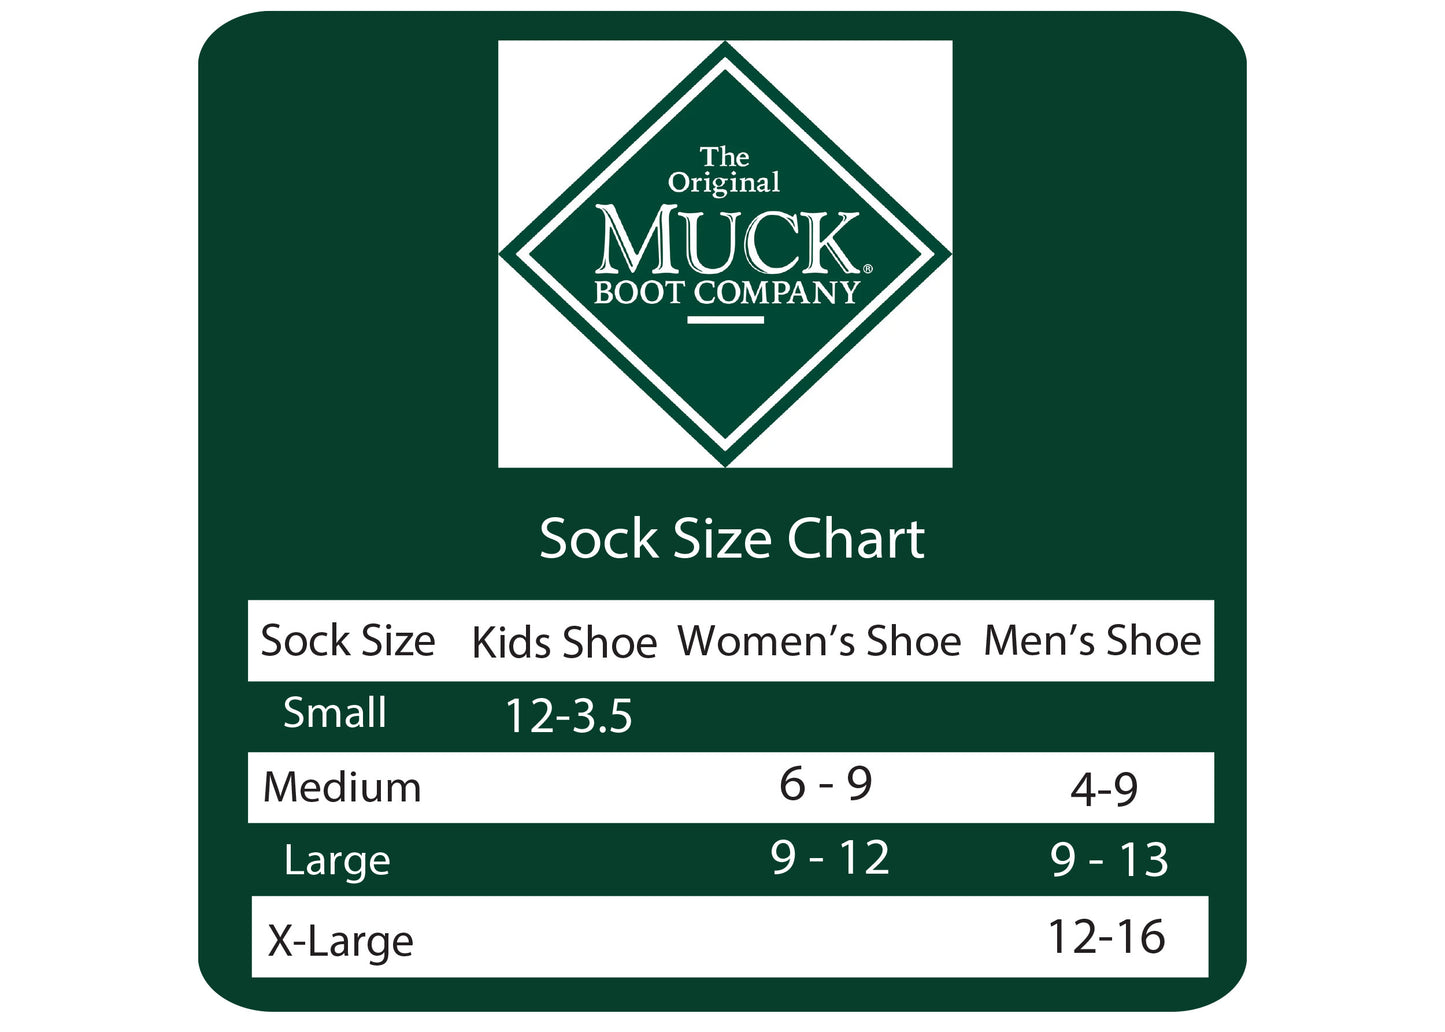 Muck Boot Mens Merino Wool Blend Camo Tall Boot Socks 2 Pair Pack